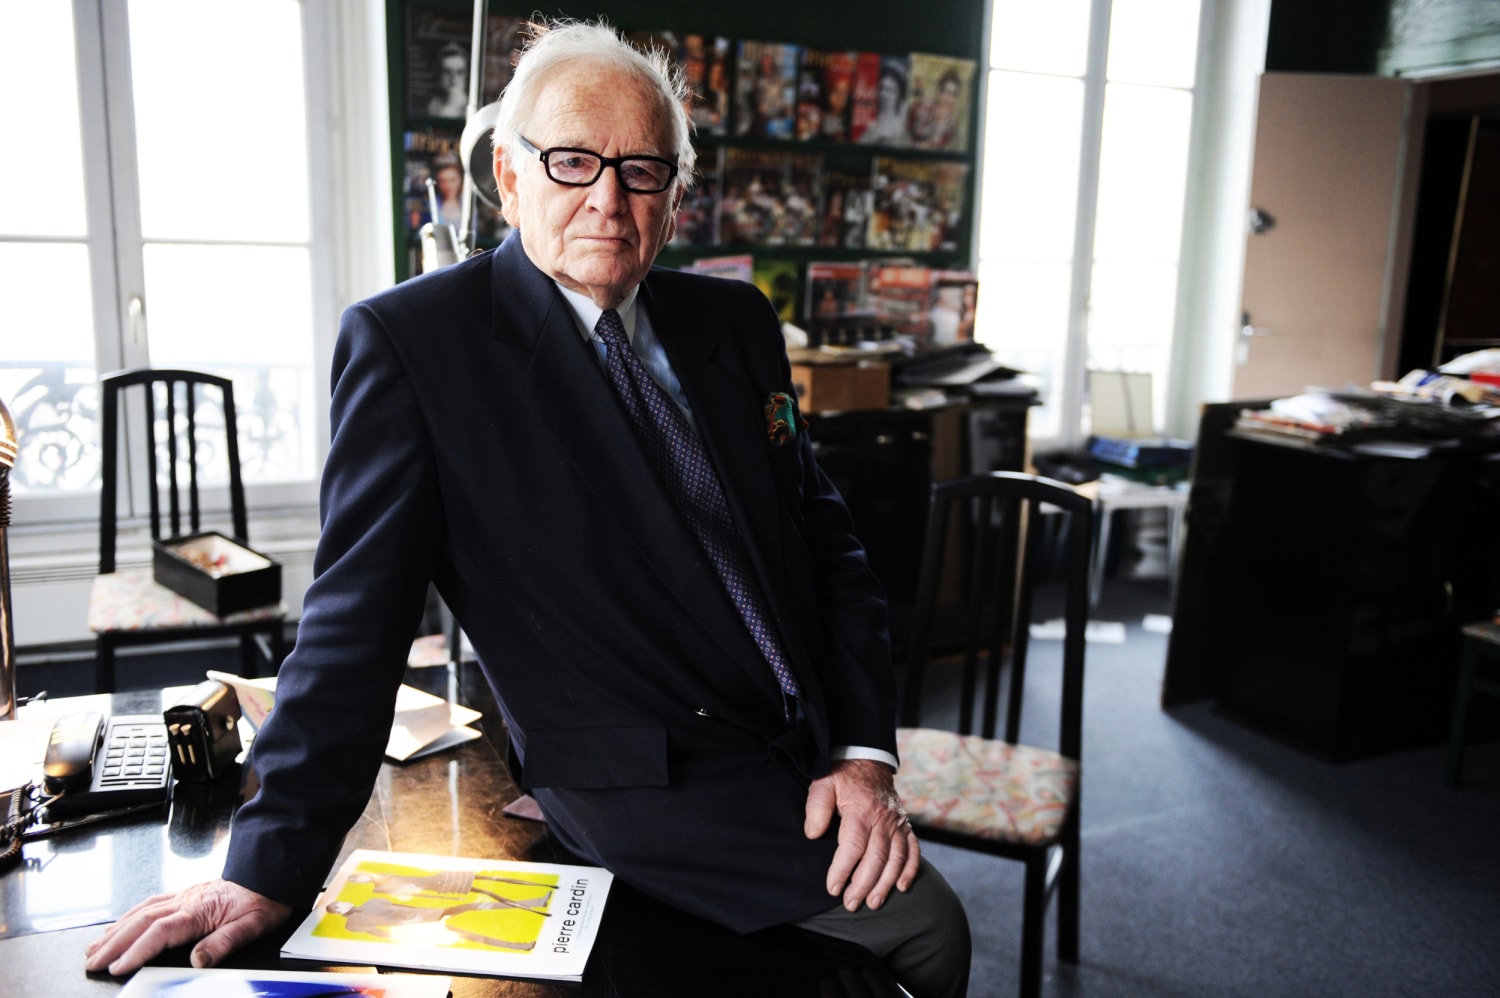 Famed French designer Pierre Cardin dies at 98